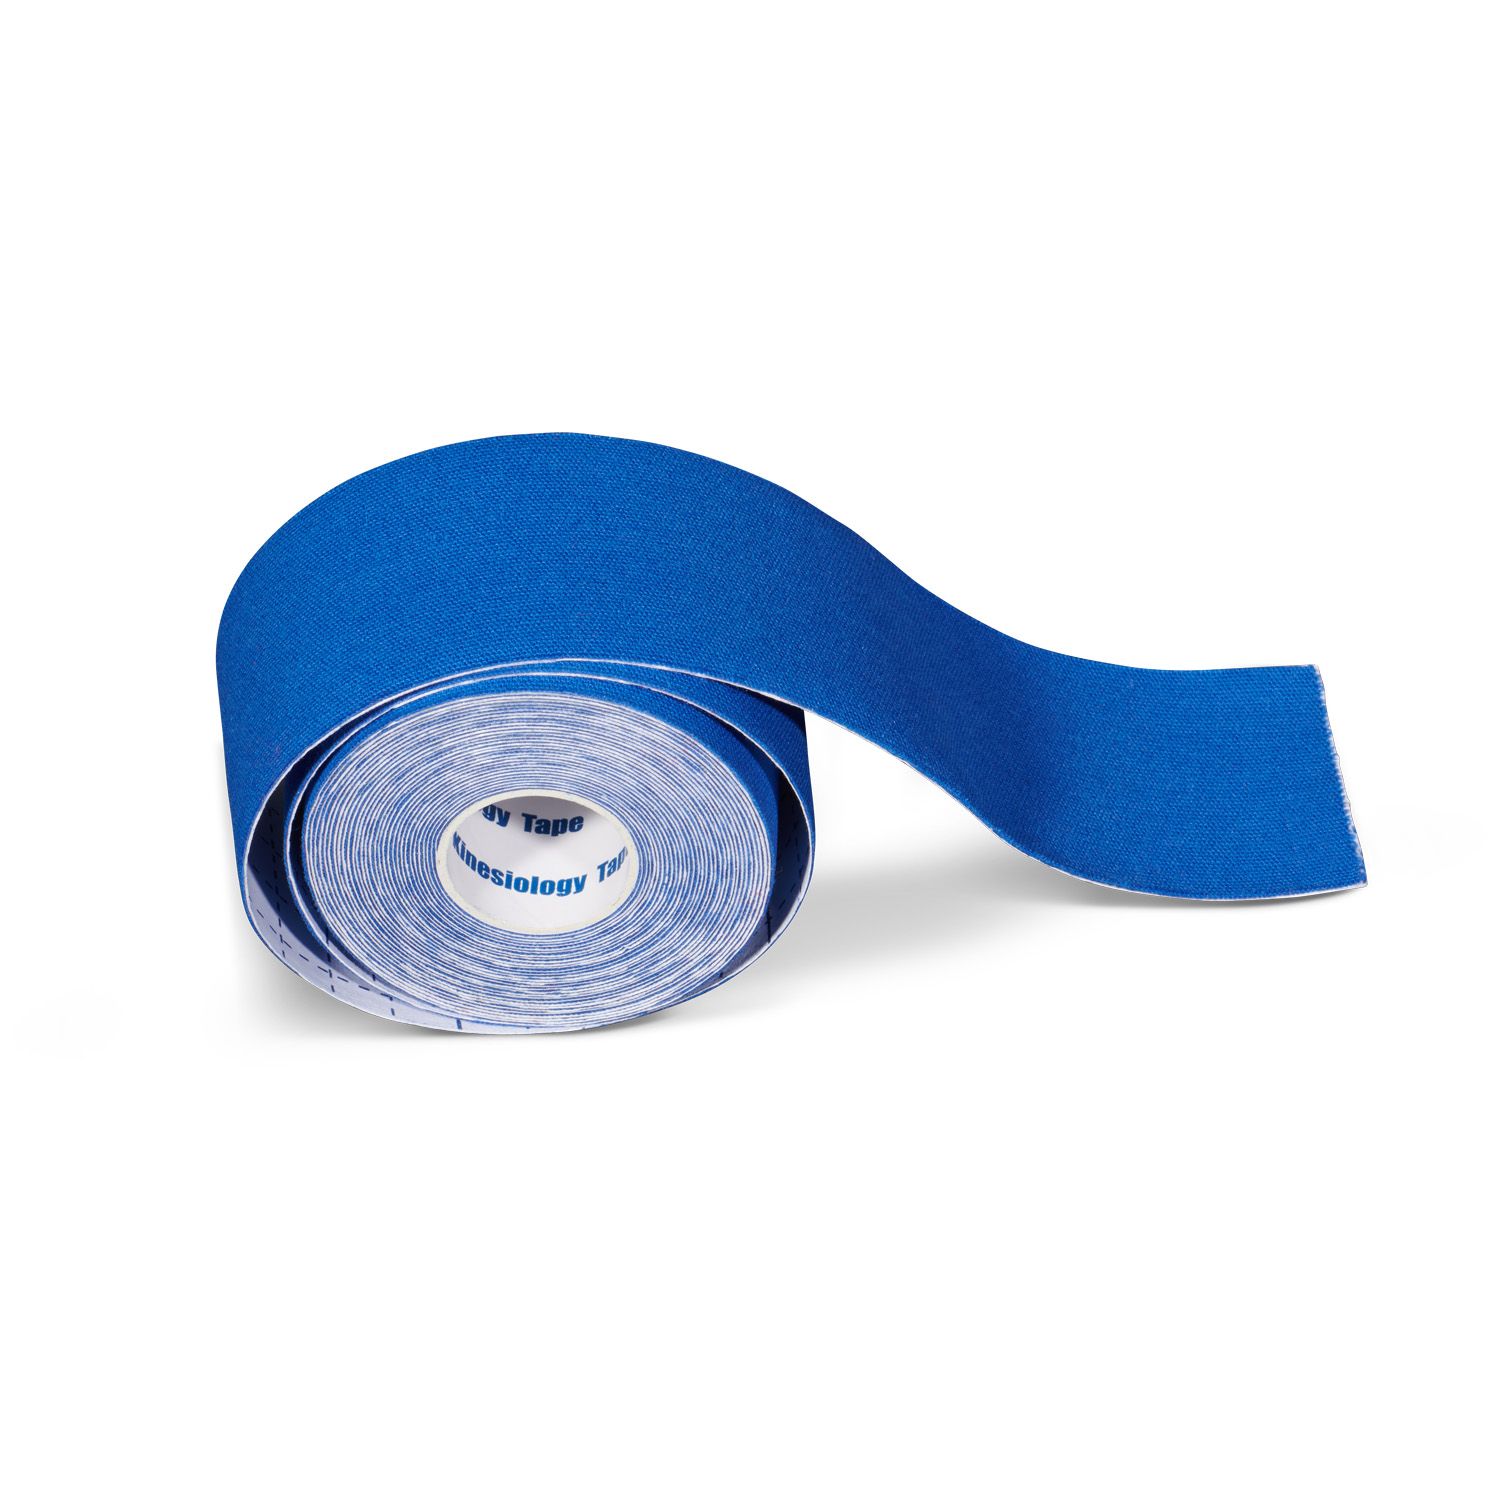 Kinesiology tape per roll dark-blue